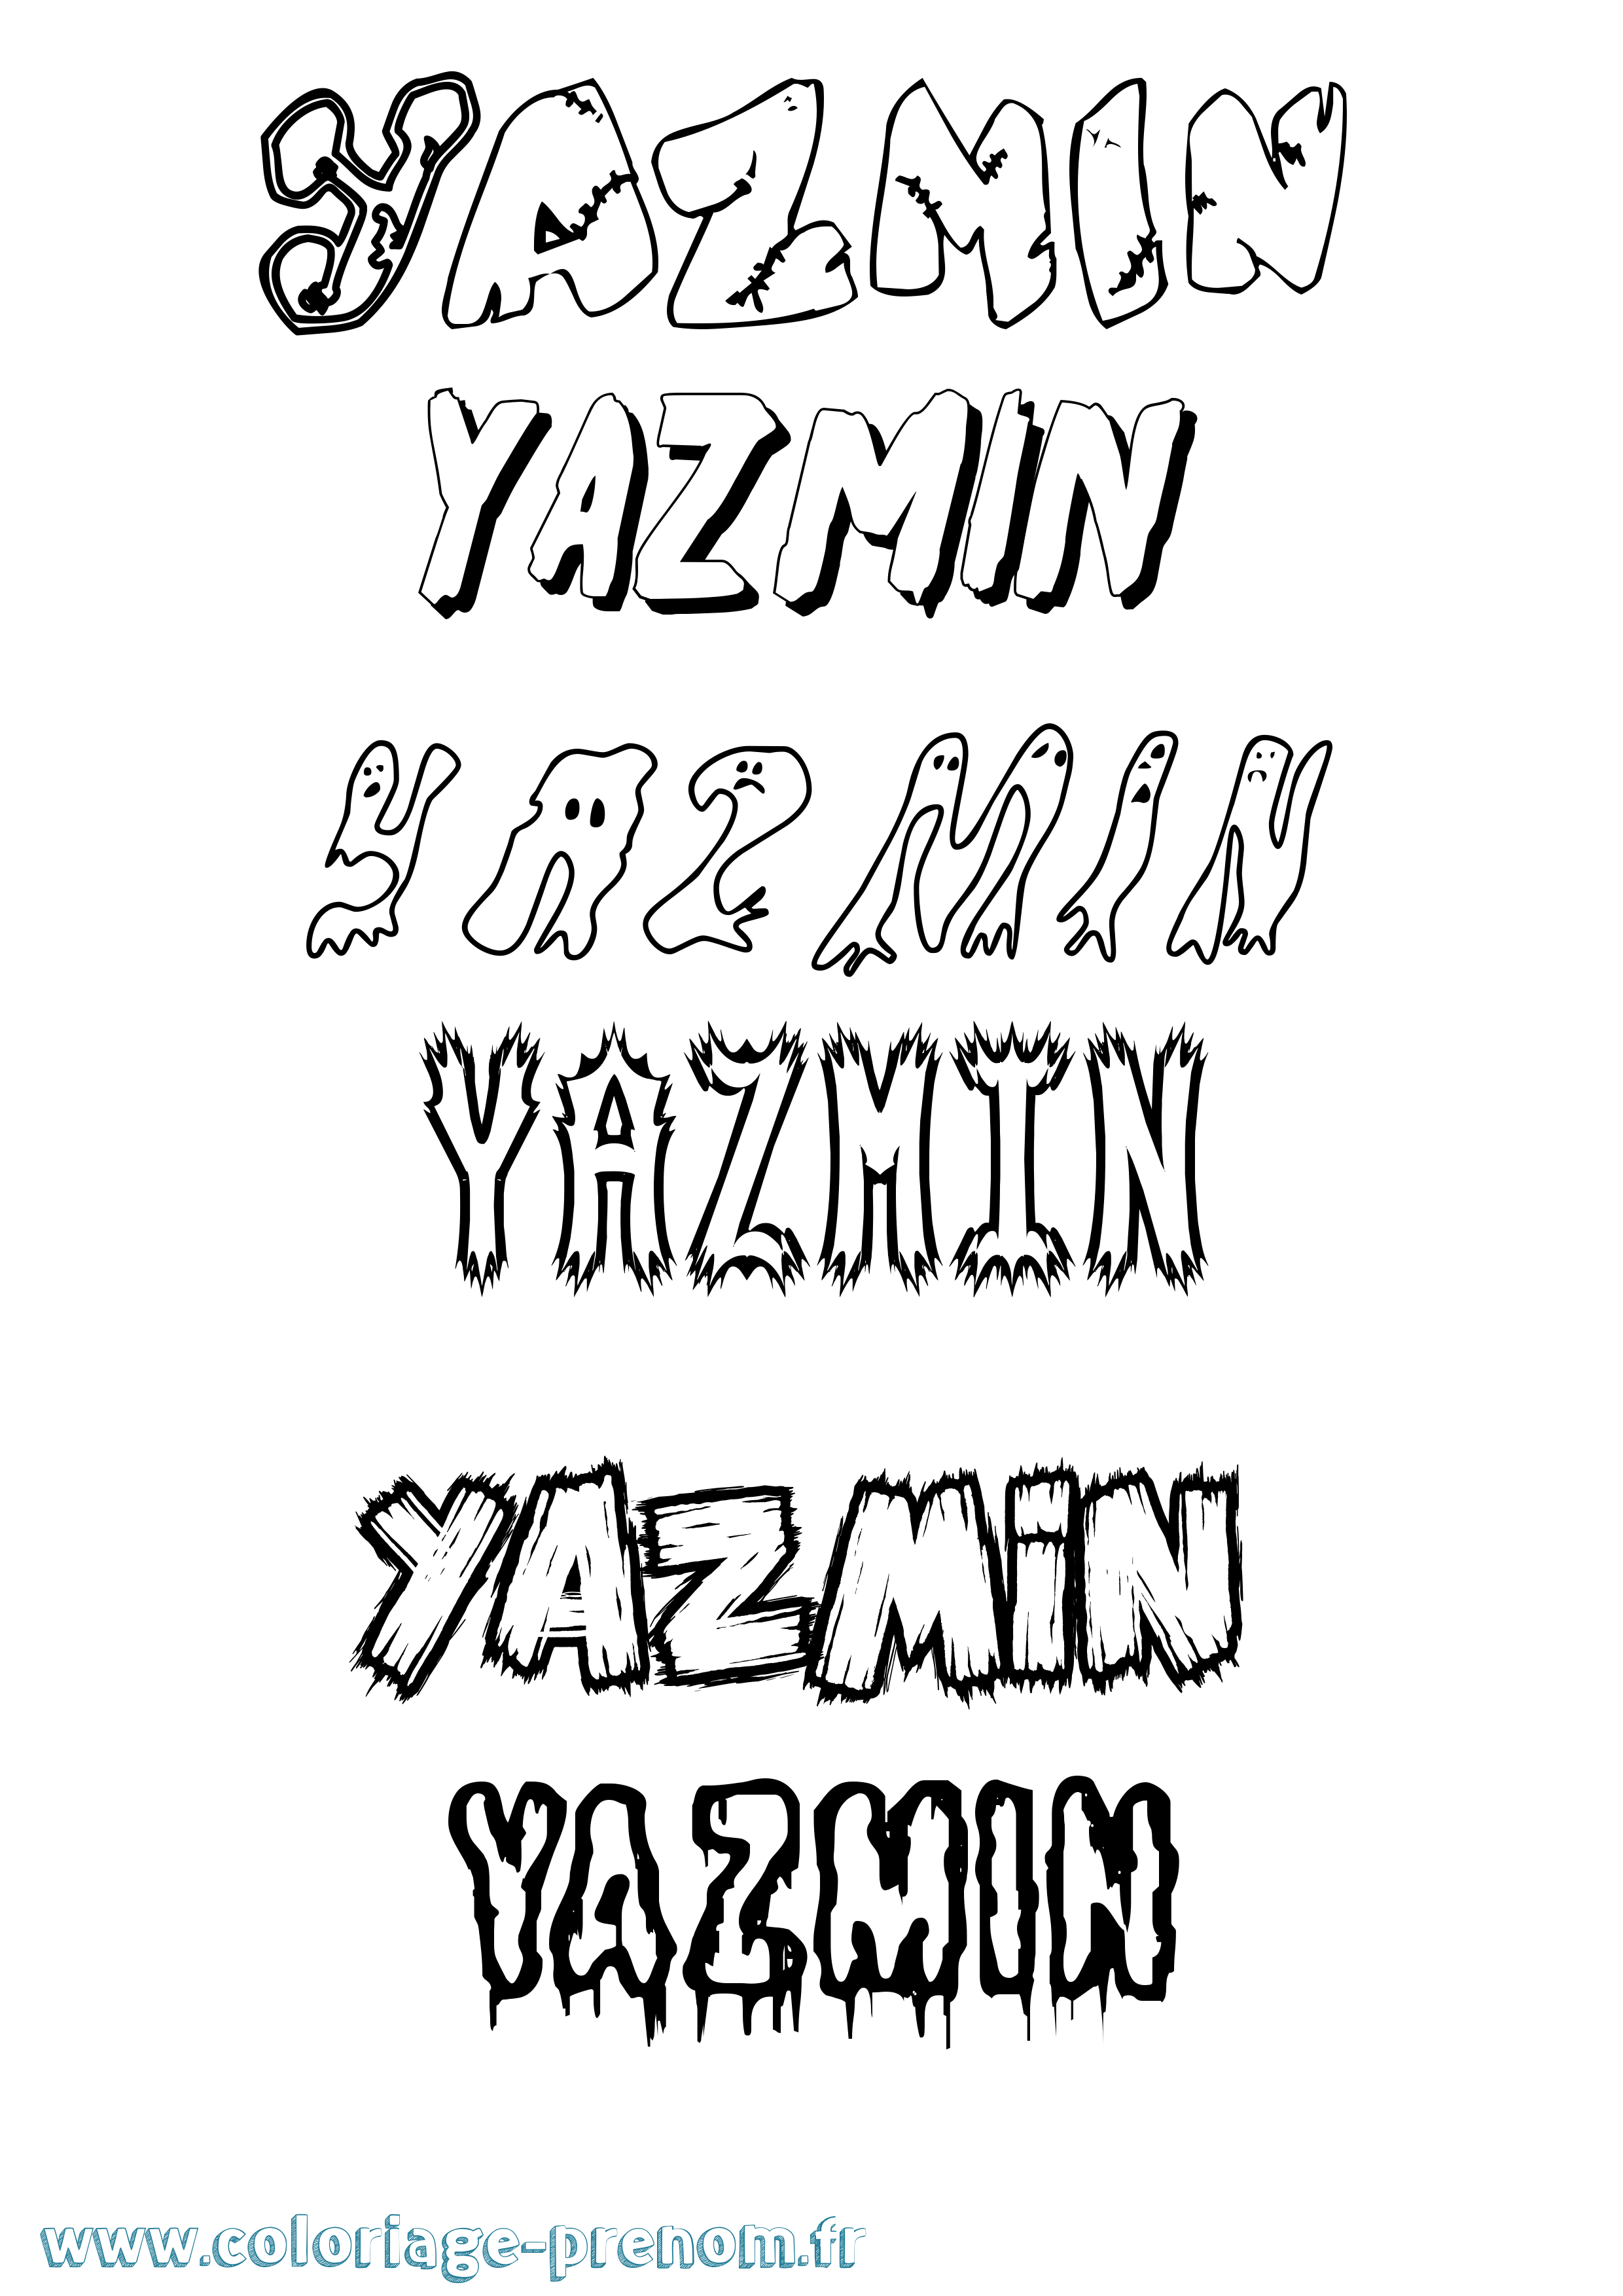 Coloriage prénom Yazmin Frisson